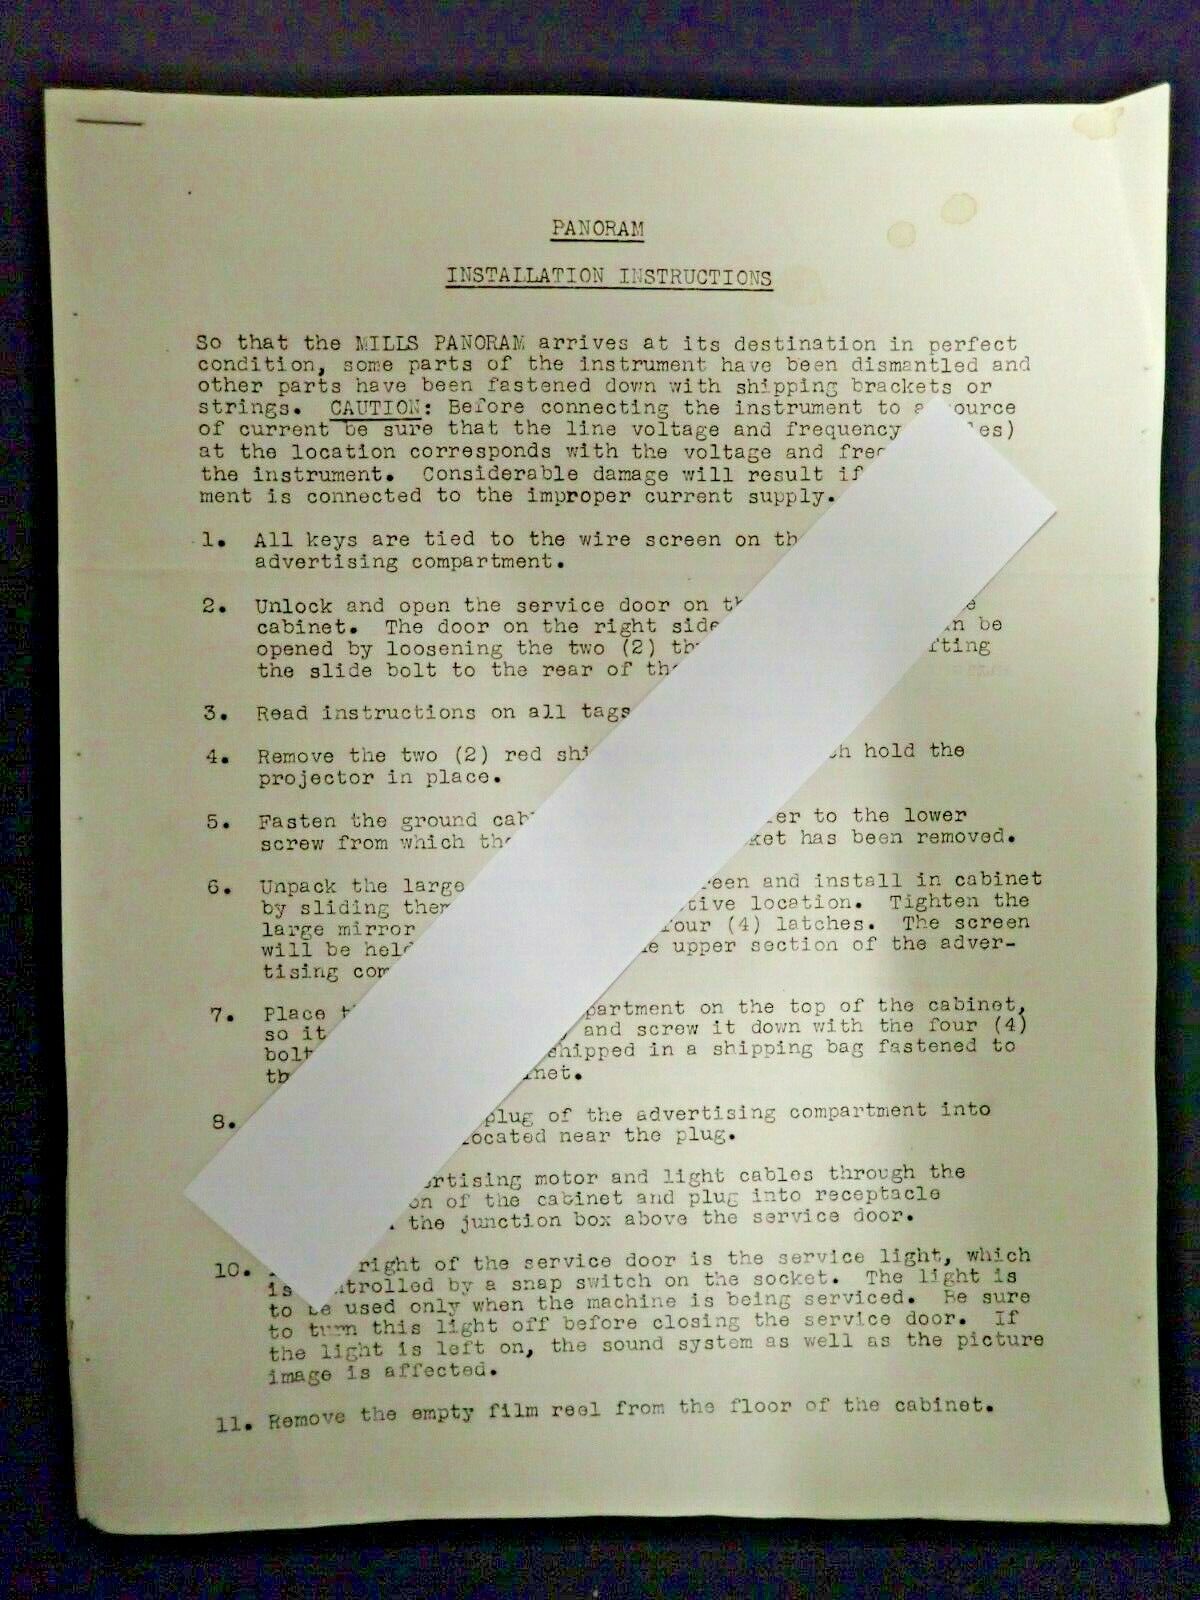 Original 1939 Mills Panoram Installation Instructions   